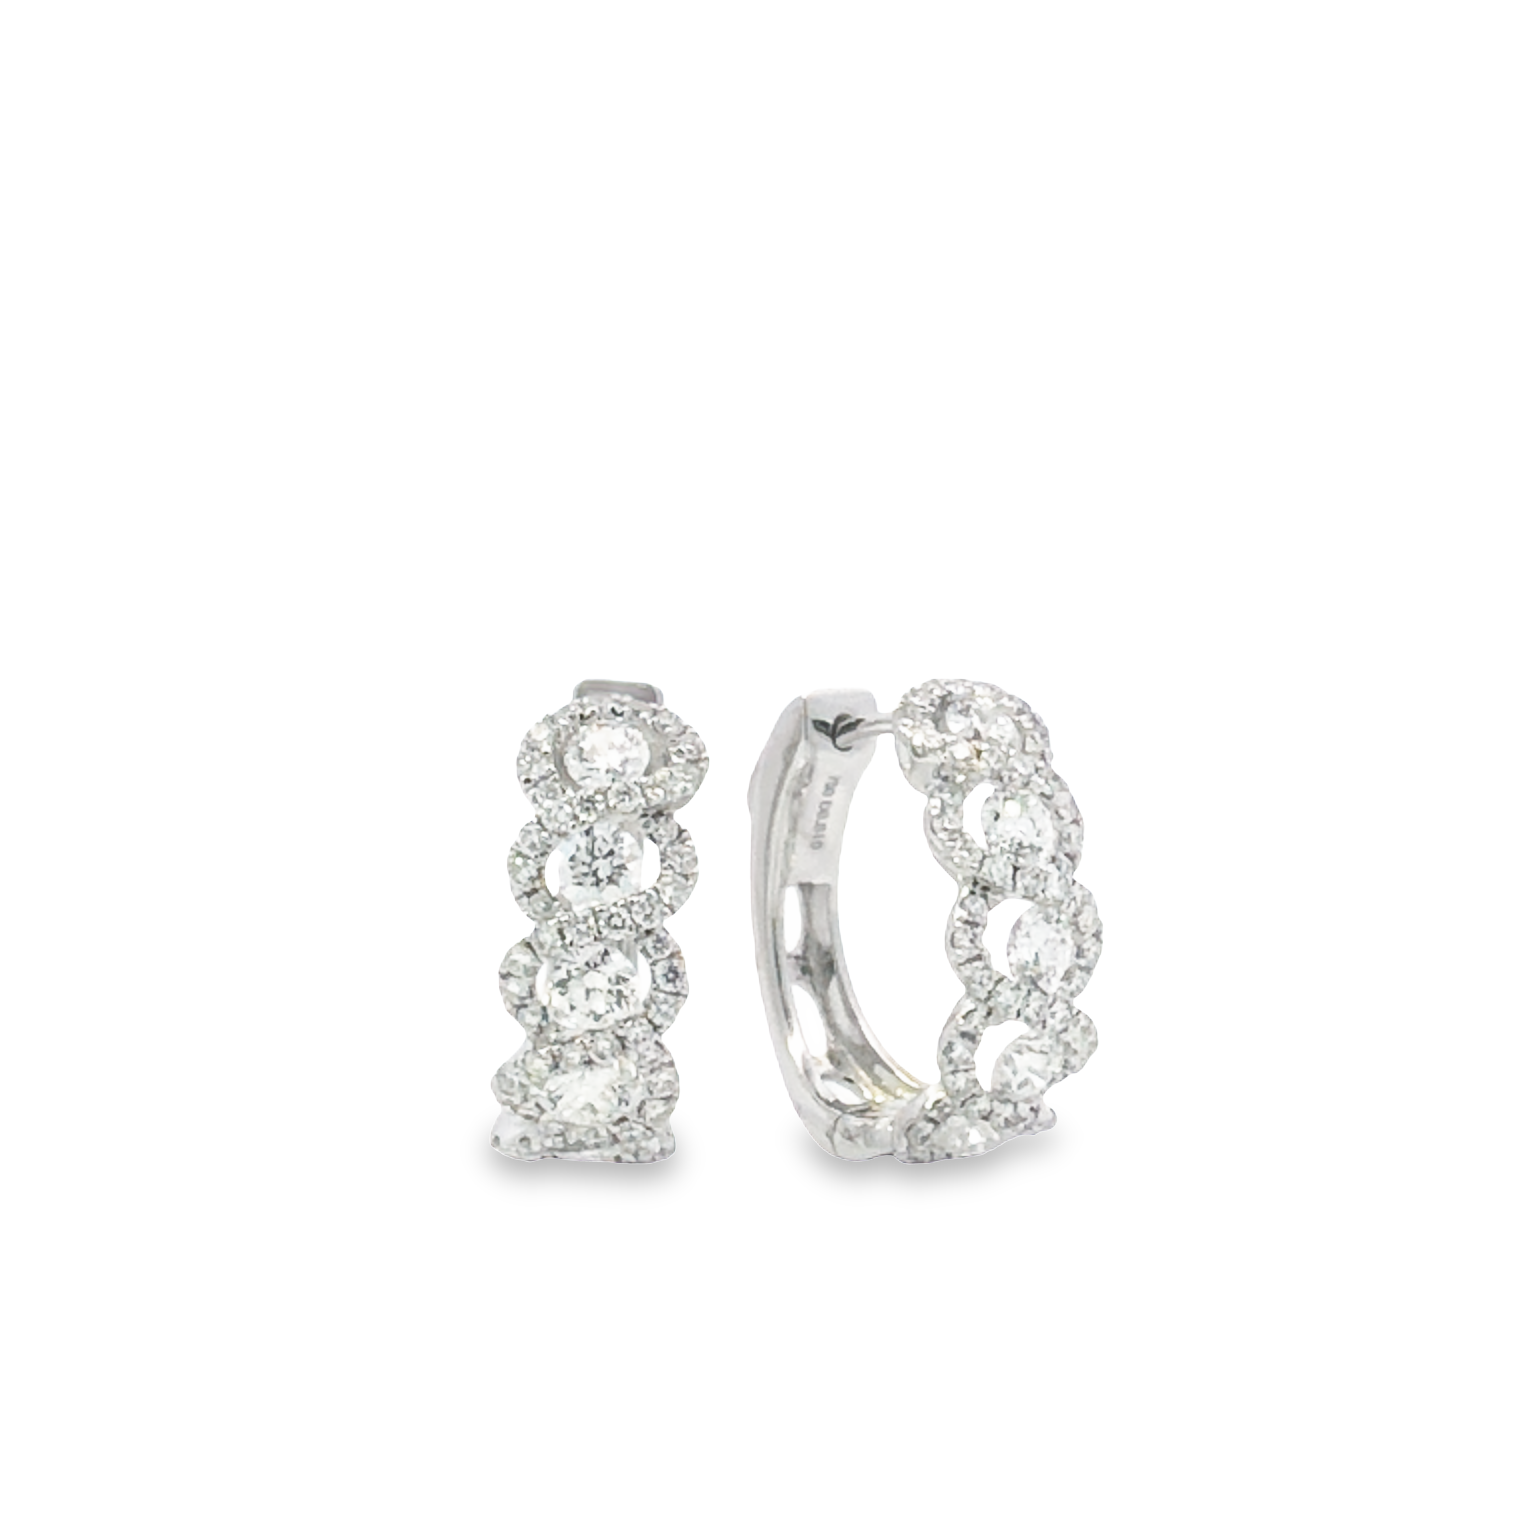 18K White Gold Diamond Huggies Earrings